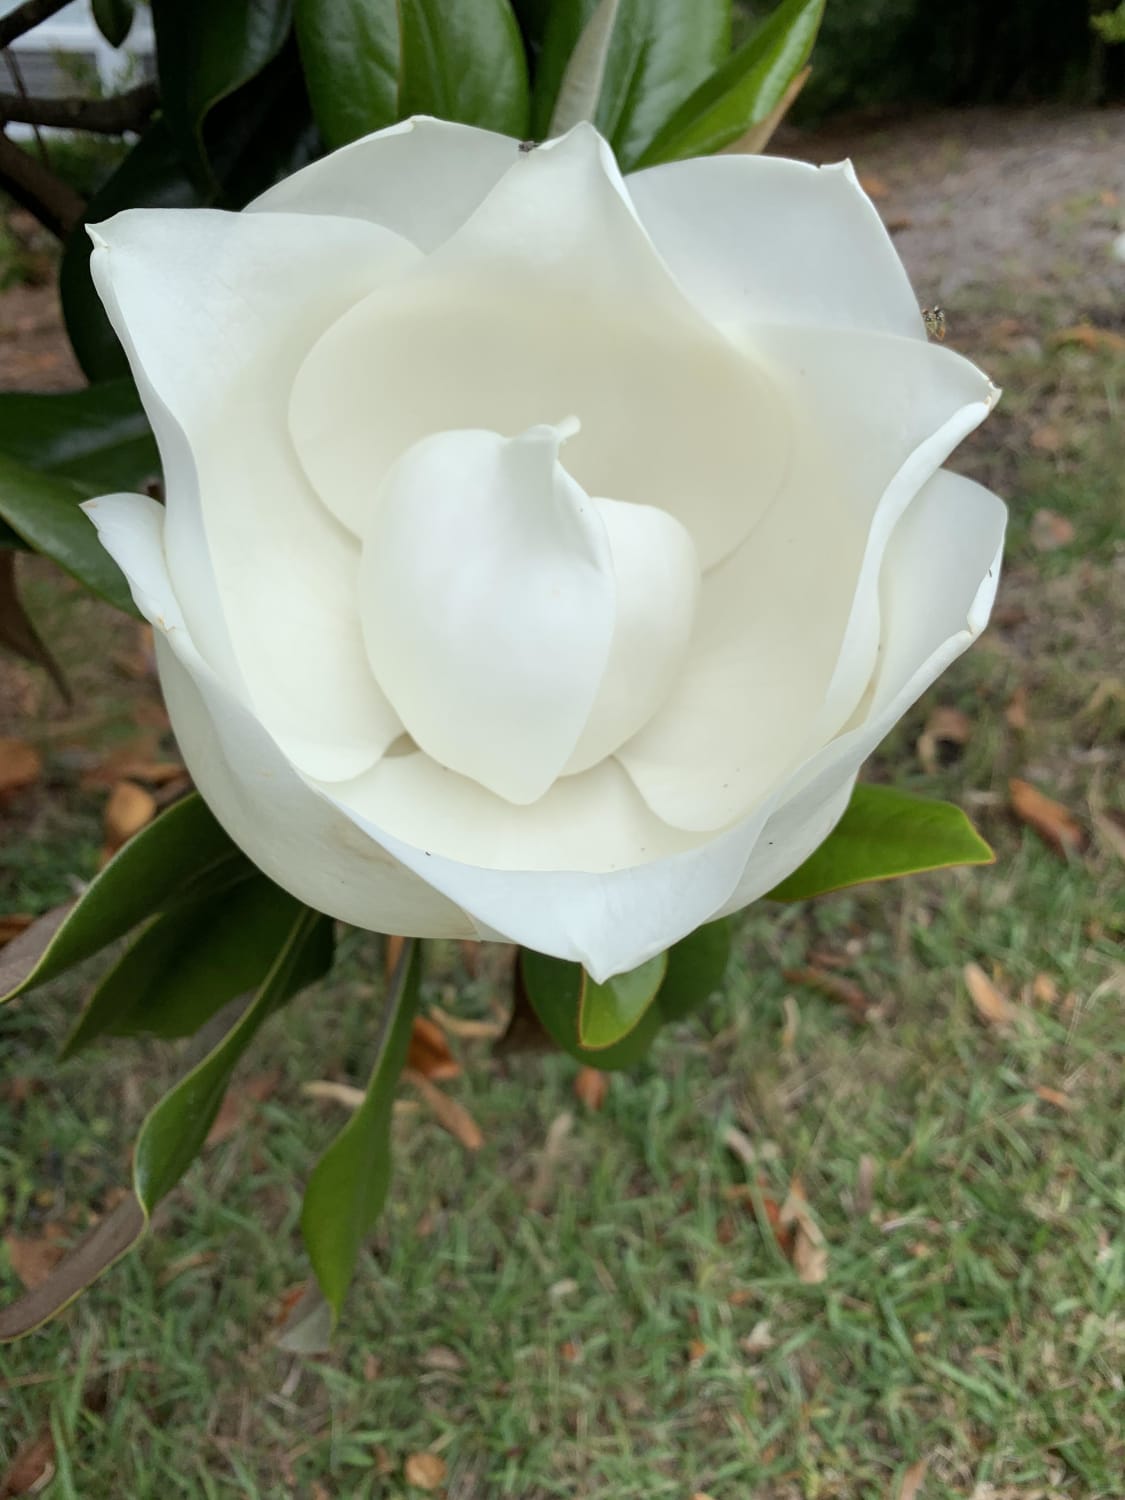 Near perfect magnolia flower